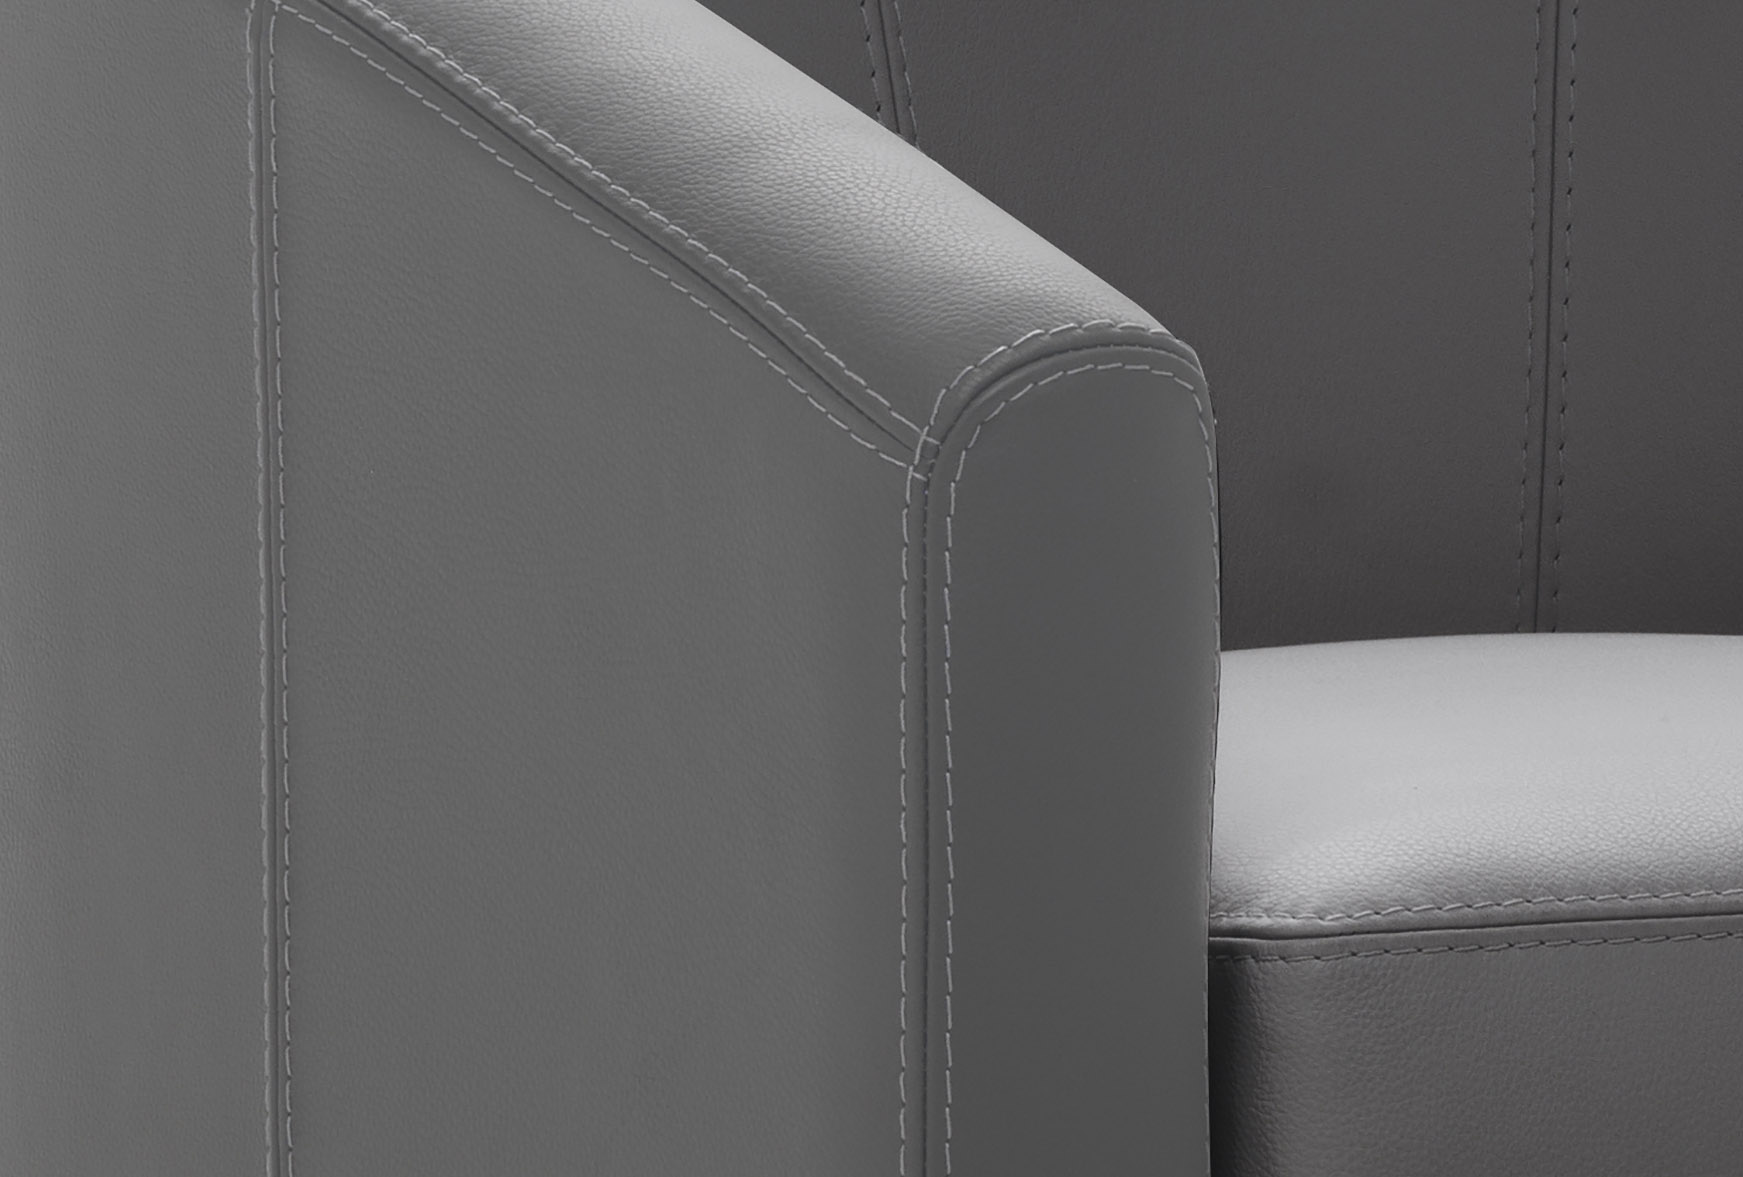 Italian Made Grey Italian LeatherLiving Room Chair